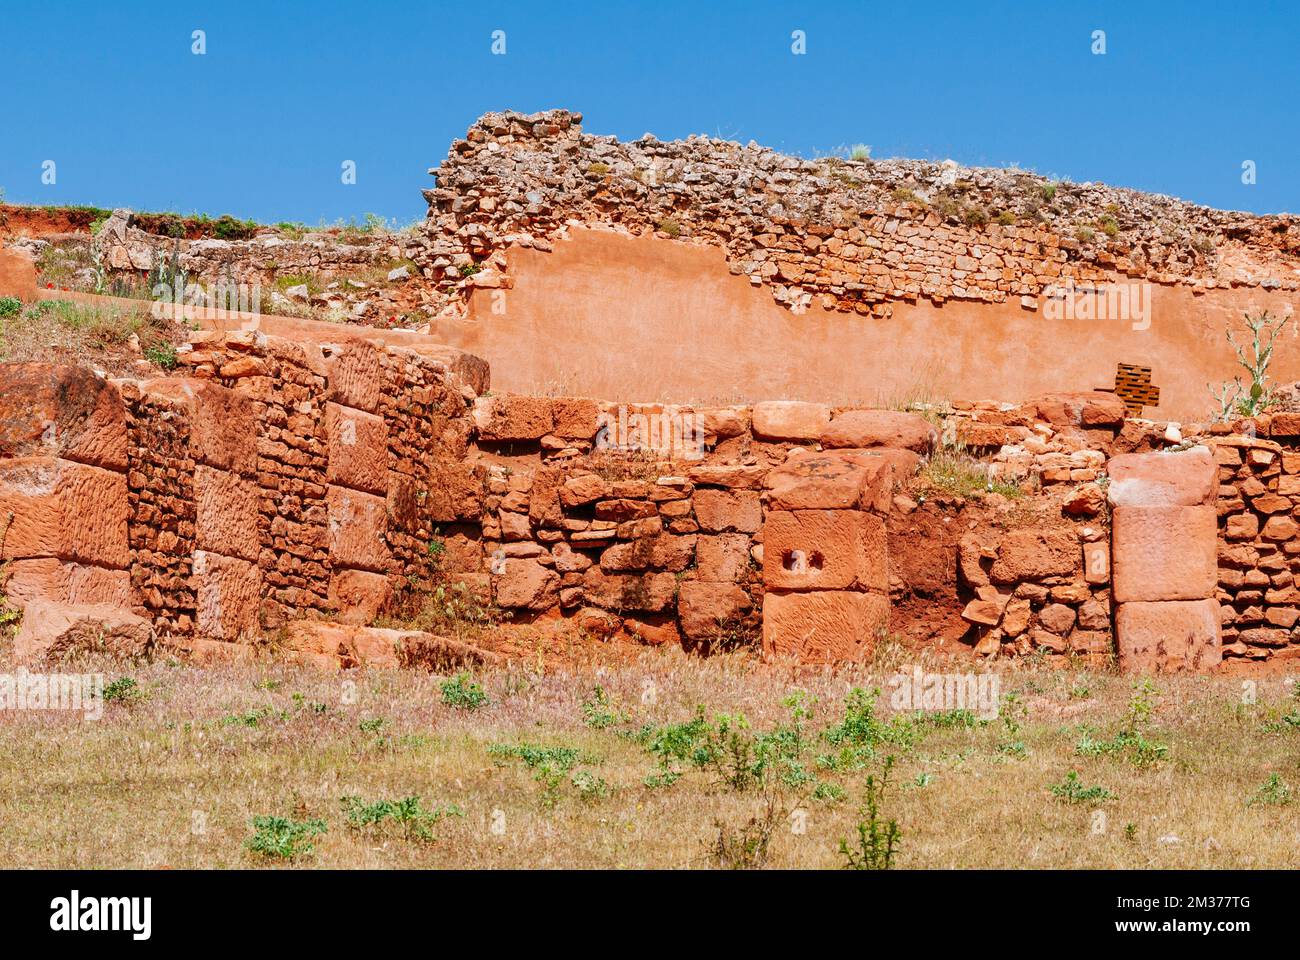 Tiermes Celtiberian-Roman Archaeological Site. Tiermes, Montejo de Tiermes, Soria, Castilla y León, Spain, Europe Stock Photo